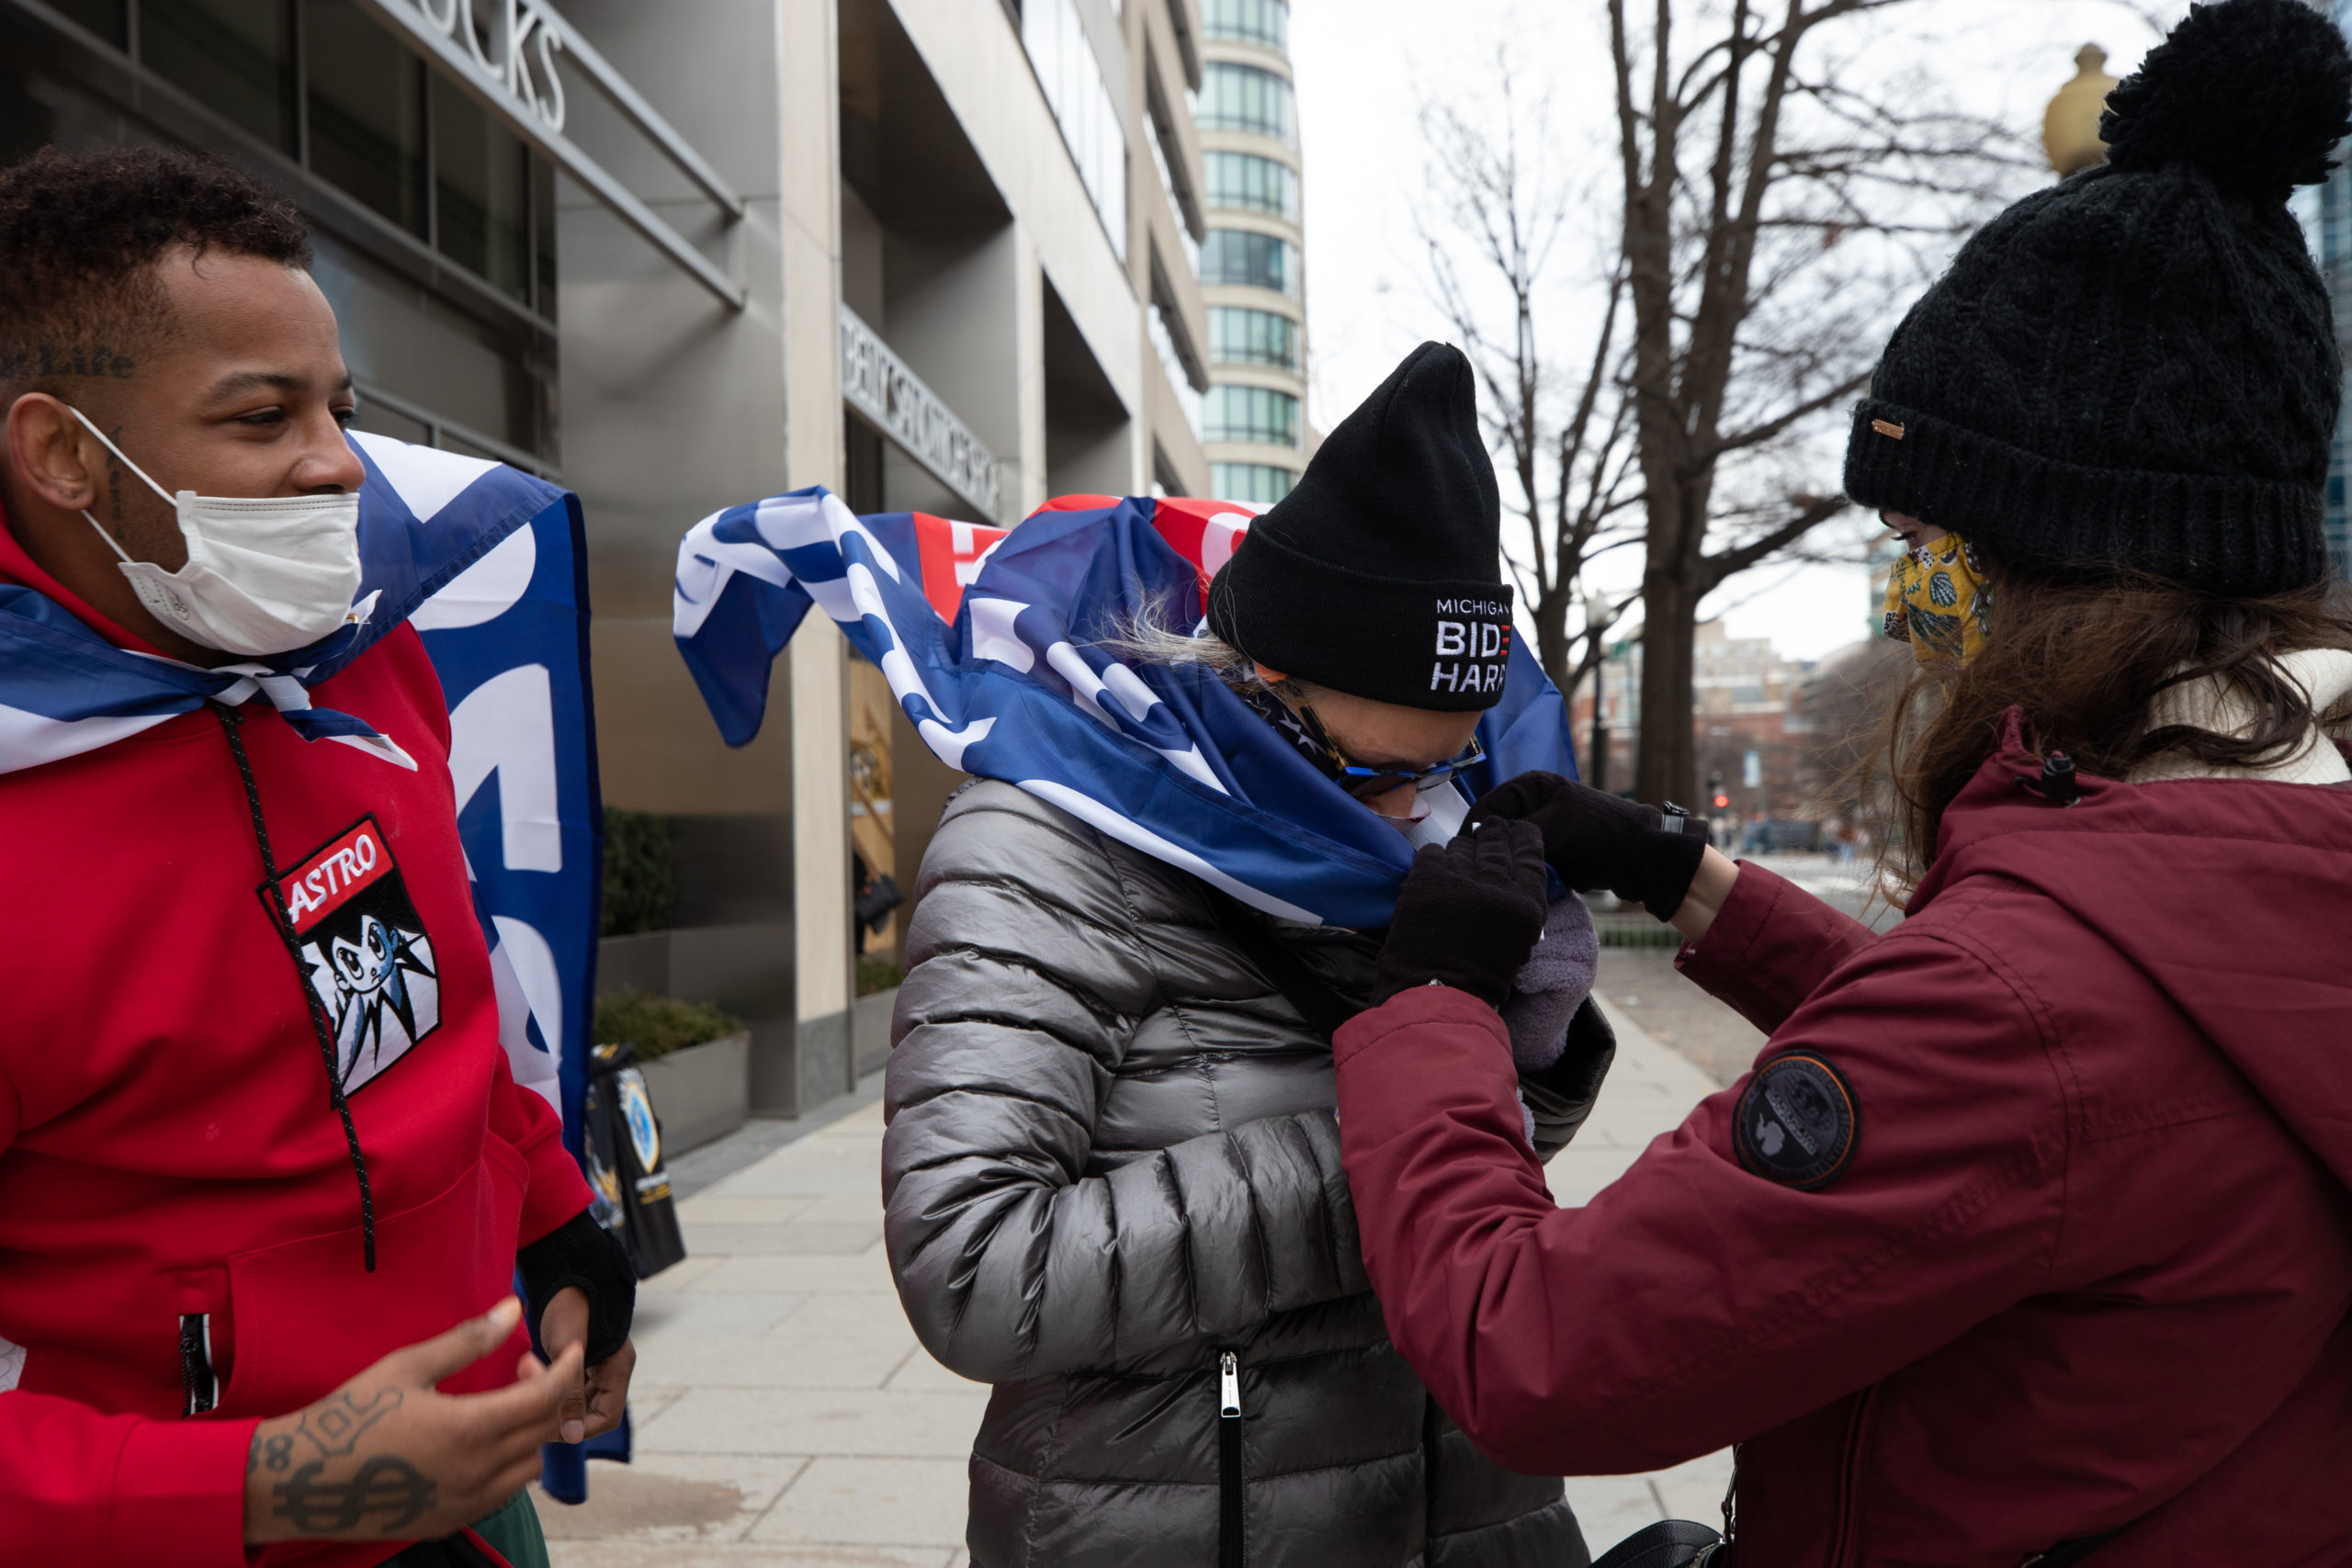 A woman tied a Biden-Harris flag around her neck in Washington, D.C. on Jan. 20, 2021. (Kaylee Greenlee - Daily Caller News Foundation)